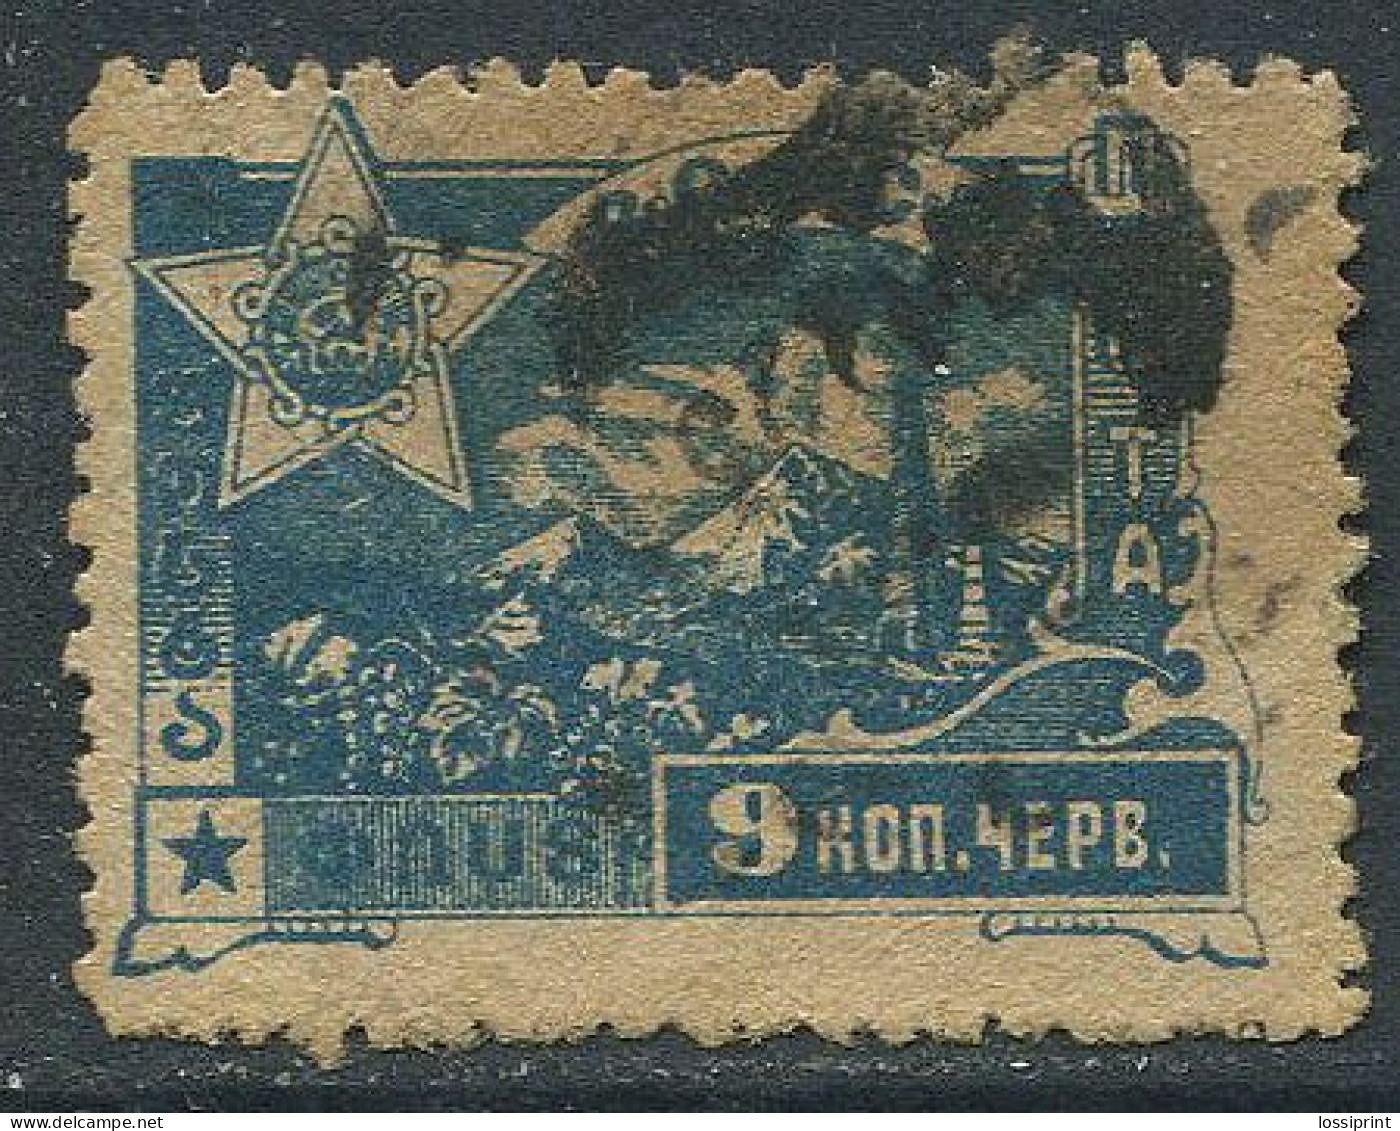 ESFSR:Russia:Used Stamp 9 Kop, 1923 - República Socialista Federativa Soviética